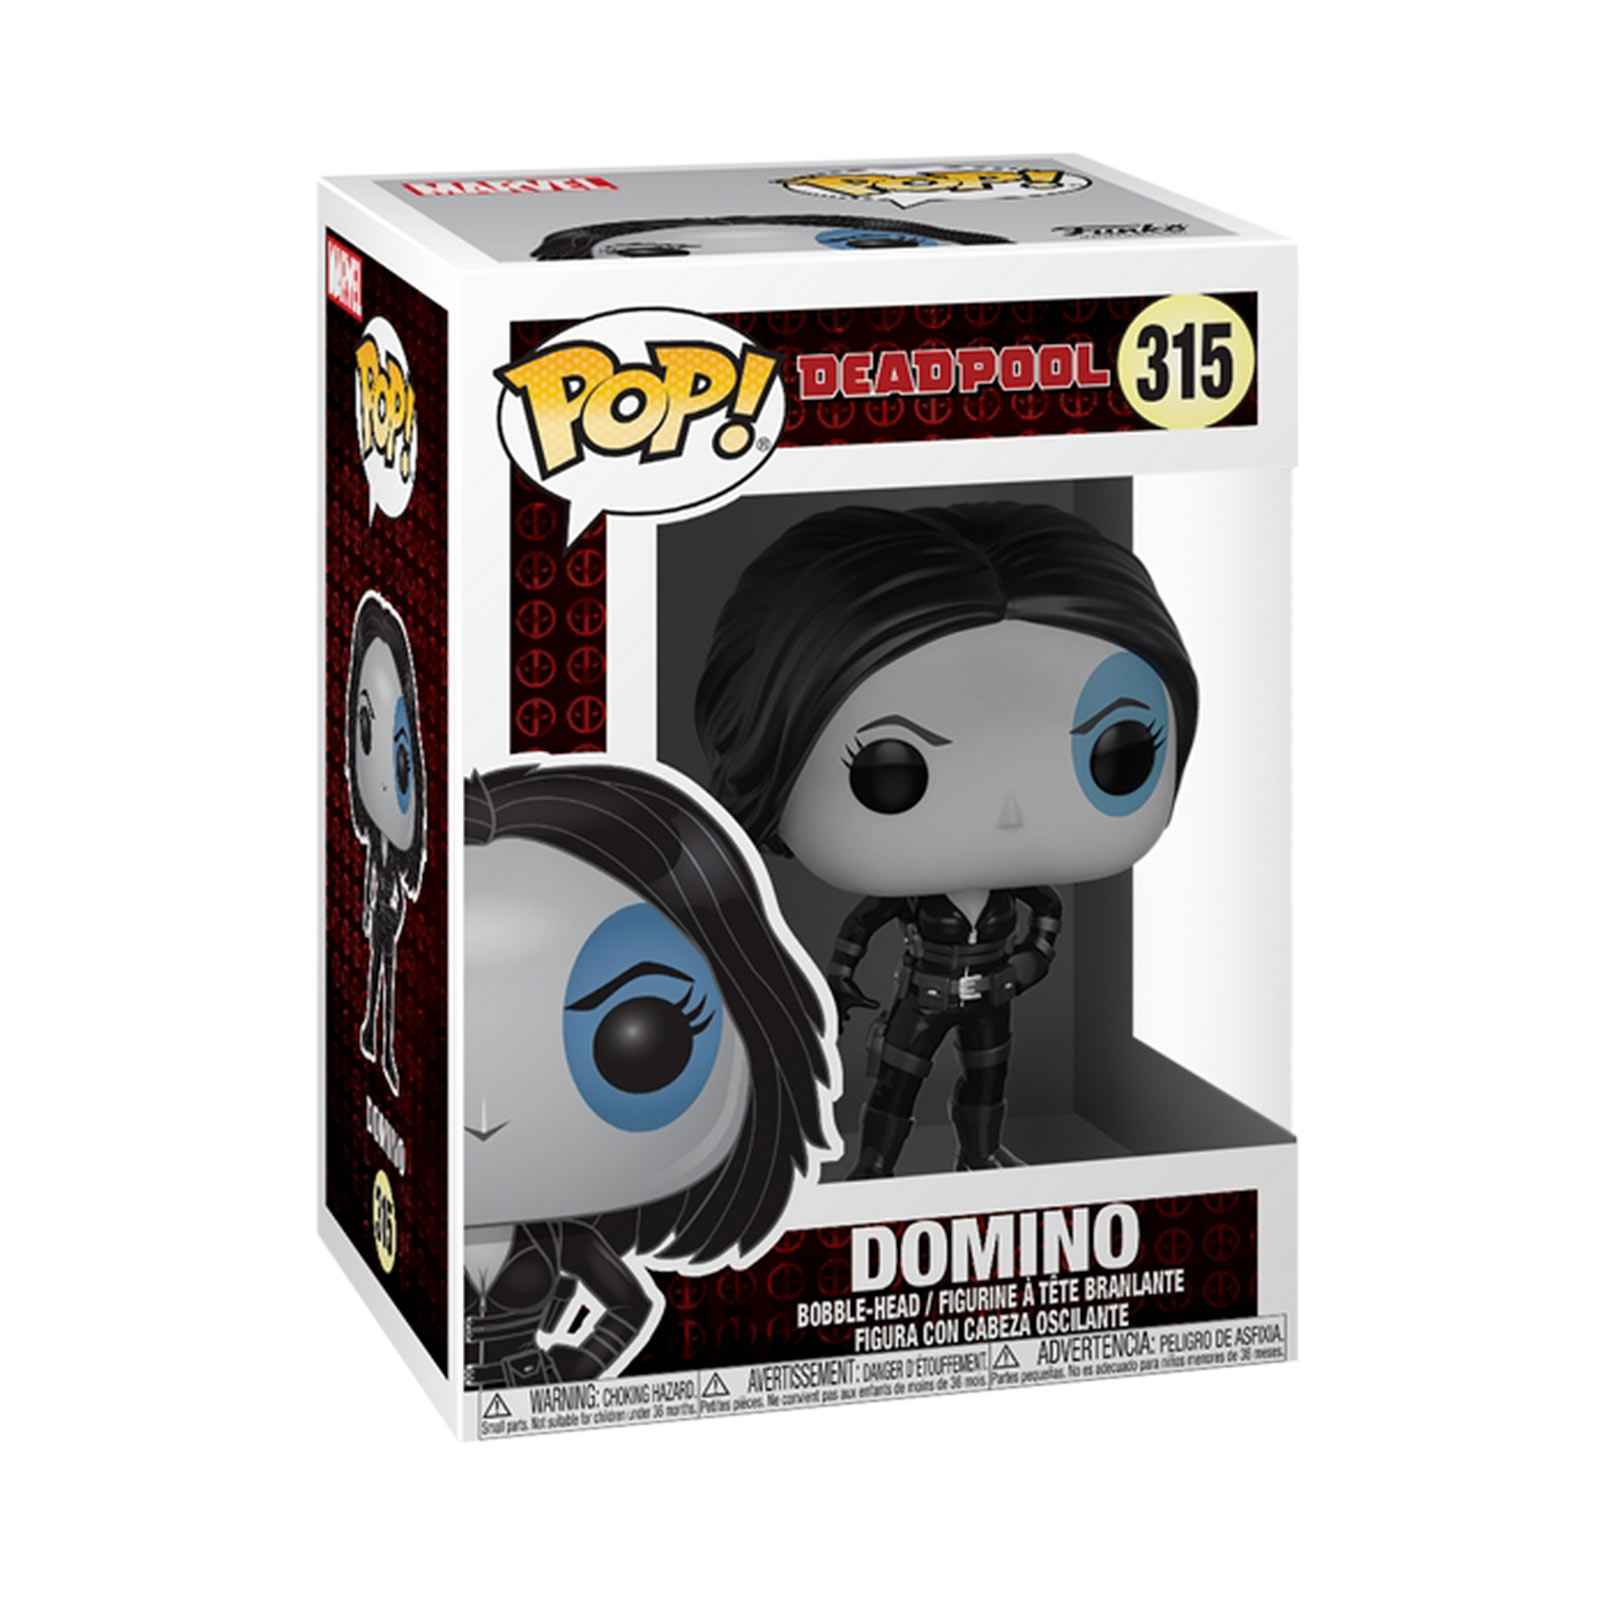 Deadpool - Domino Funko Pop Bobblehead Figuur